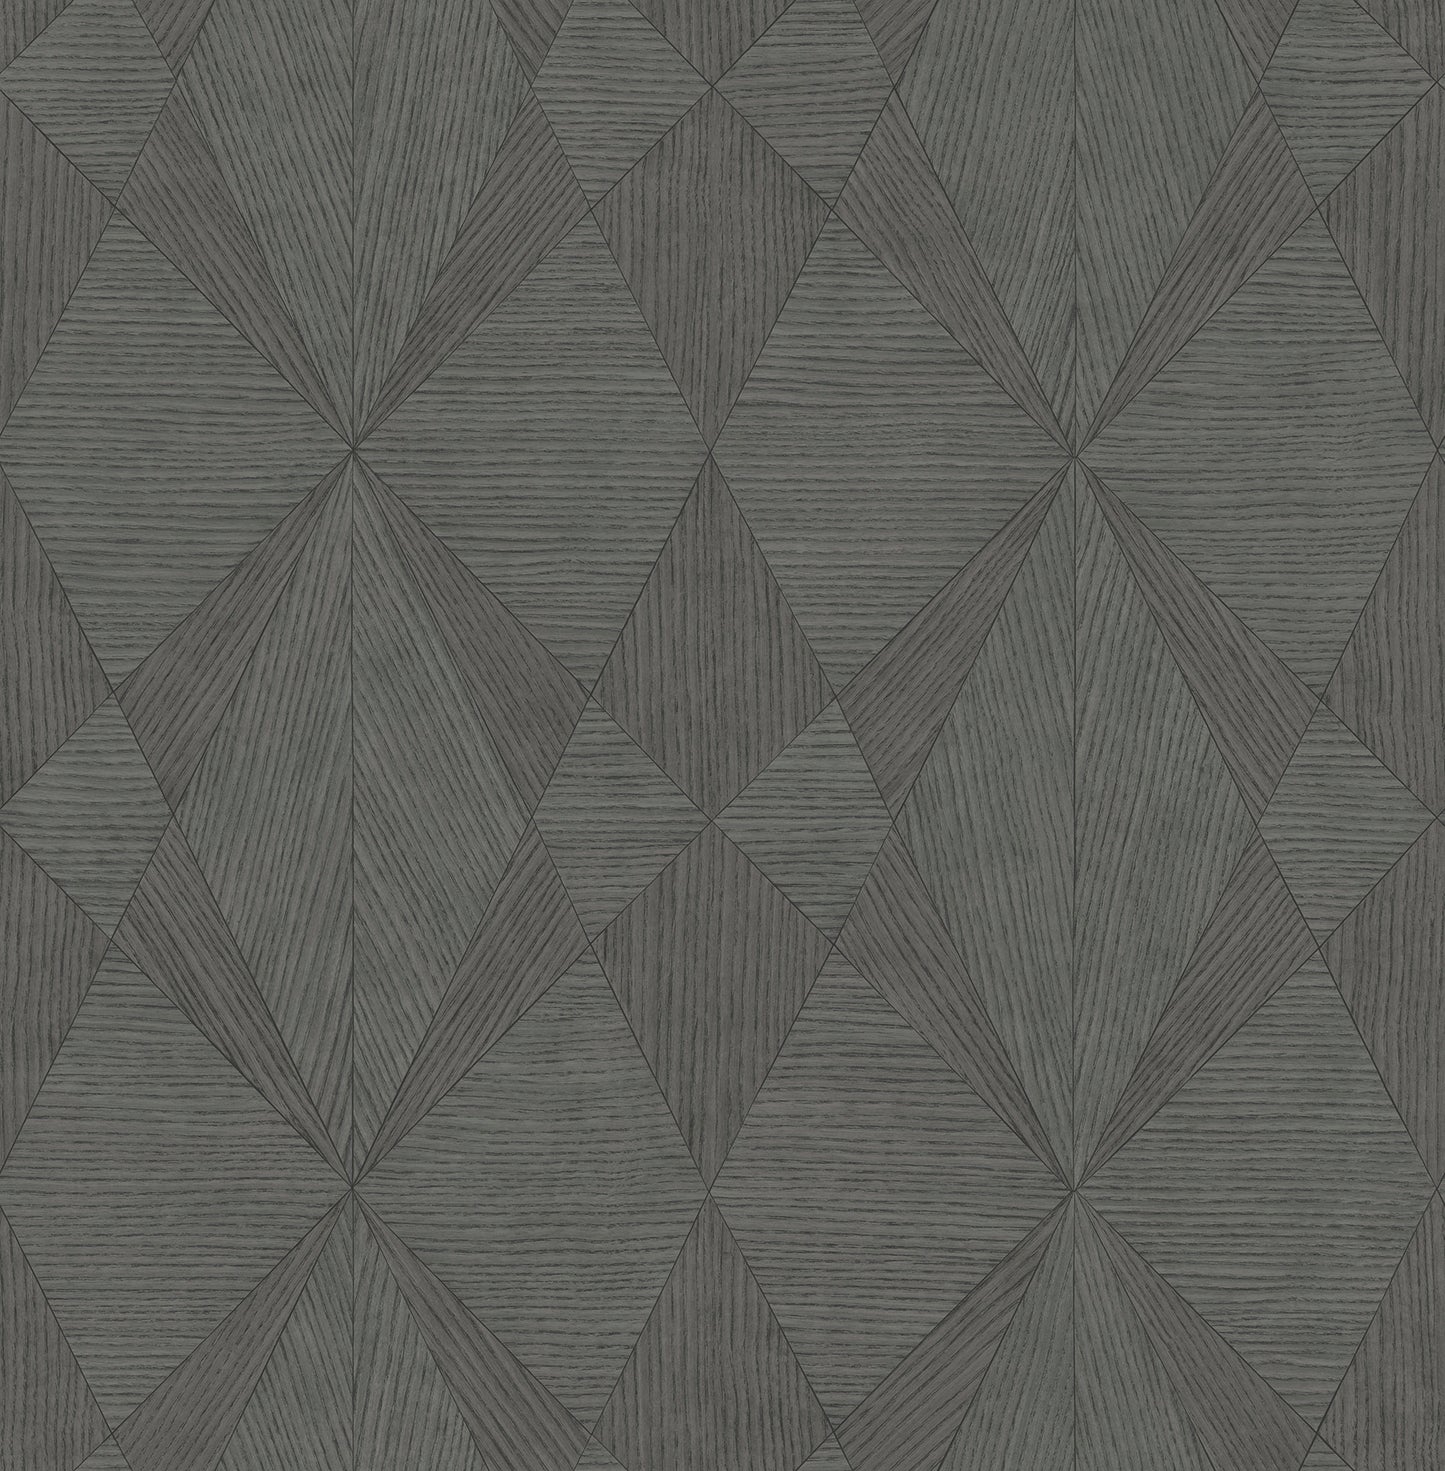 Buy 2908 25334 Alchemy Intrinsic Dark Grey Geometric Wood A Street Prints Wallpaper